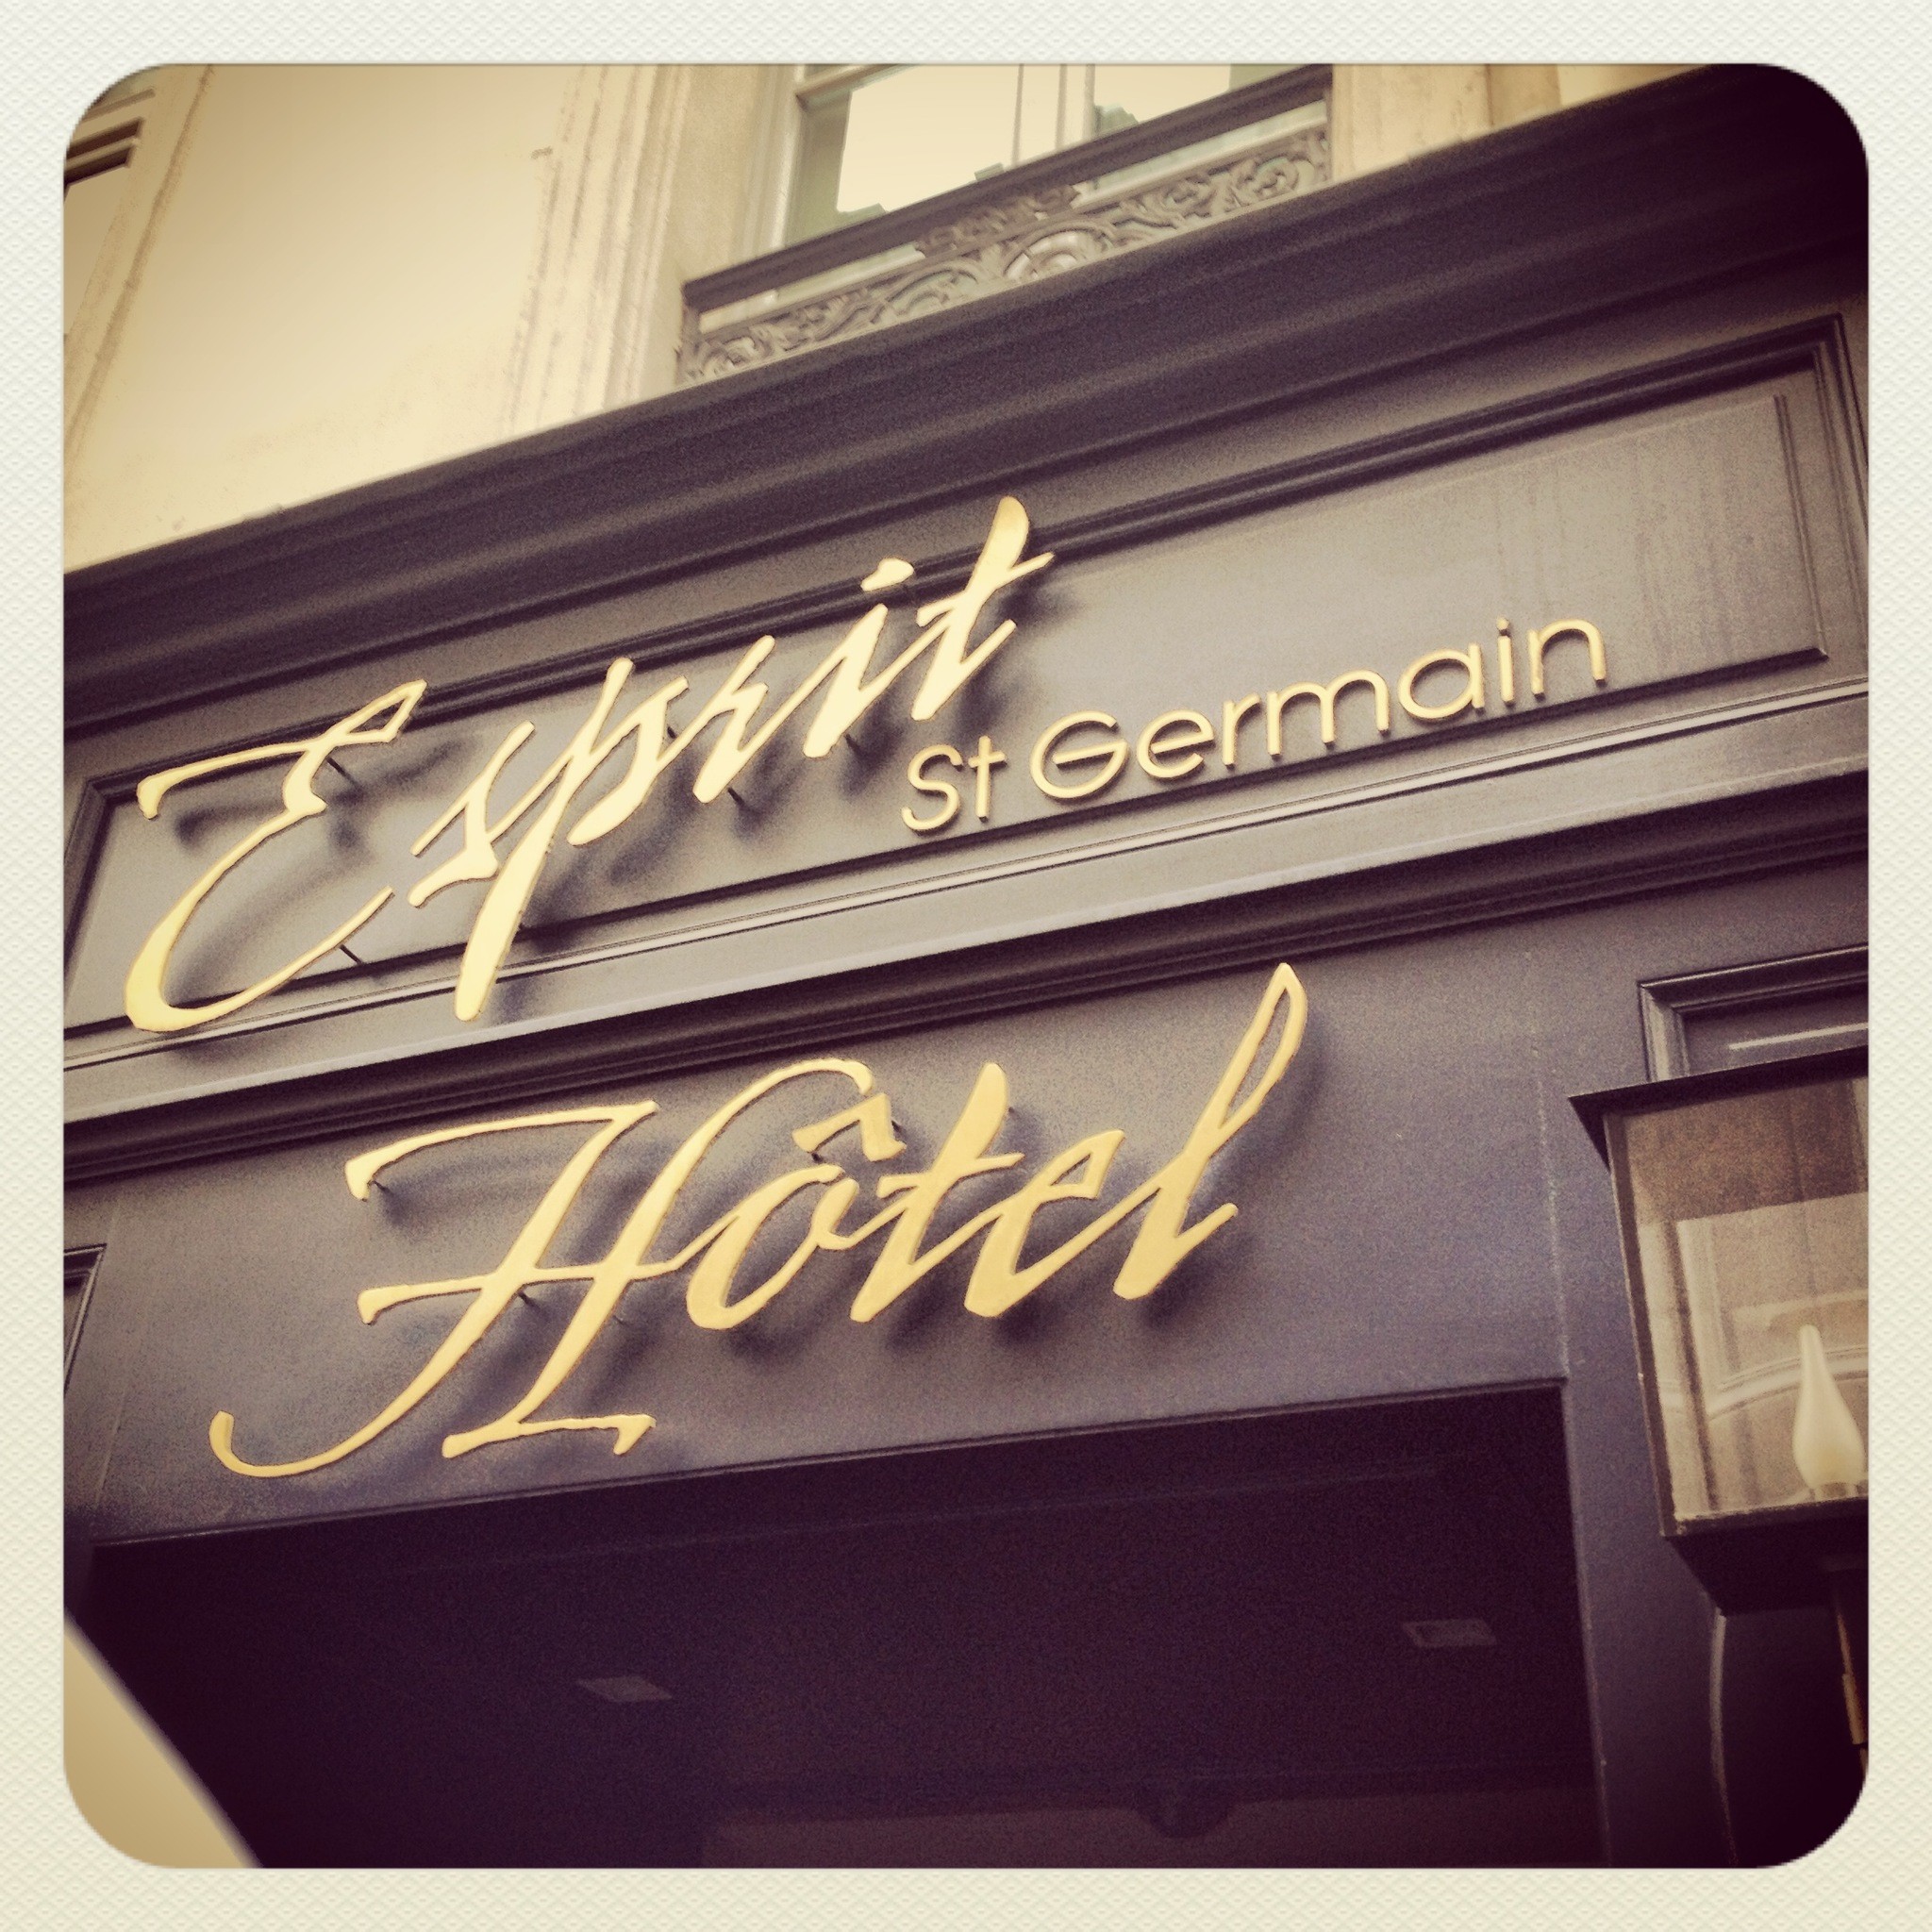 Esprit St. Germain | Luxury Boutique Paris Hotel